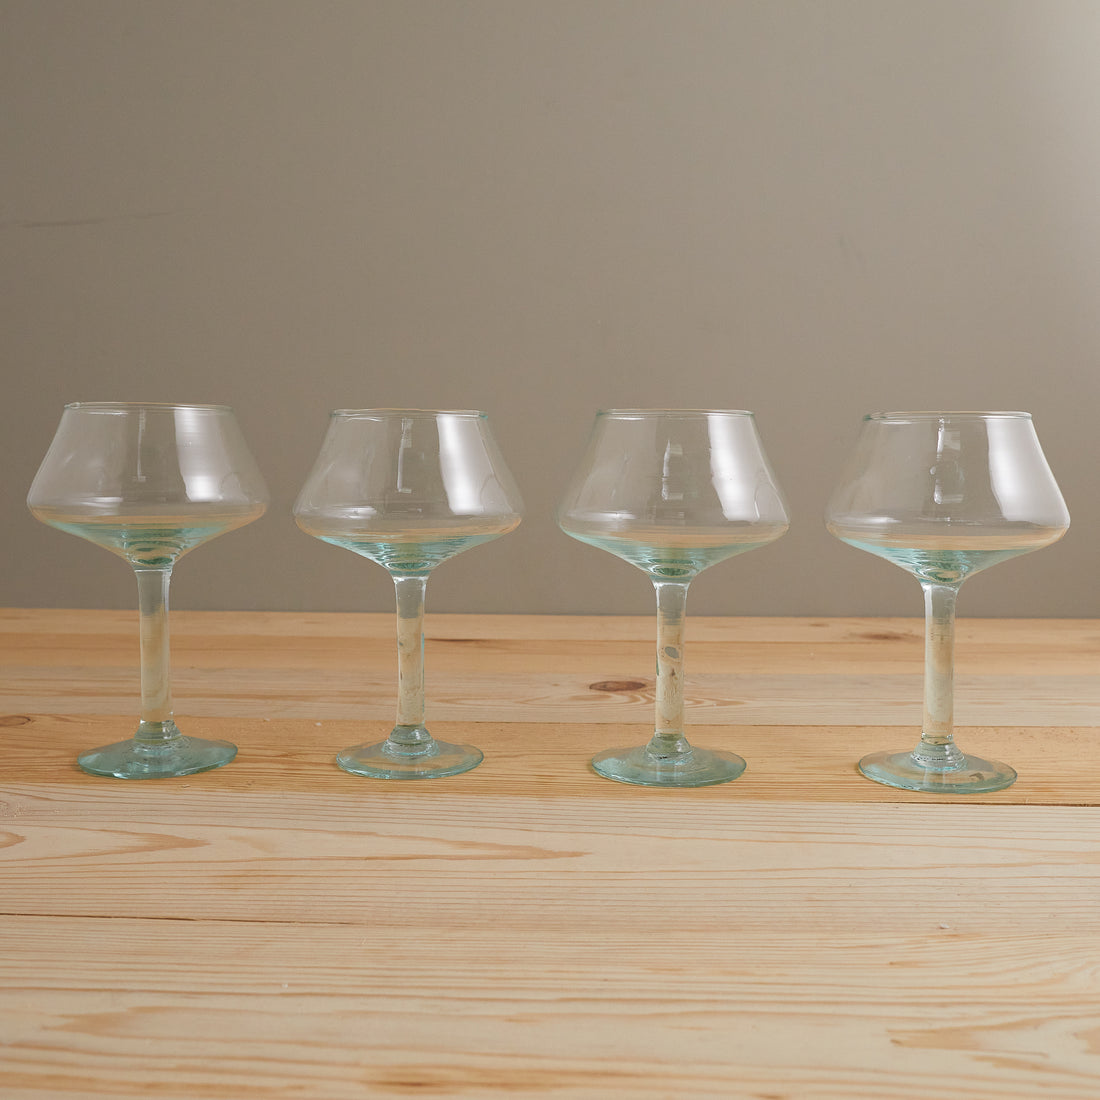 Premium Recycled Margarita Glass, Set of 4